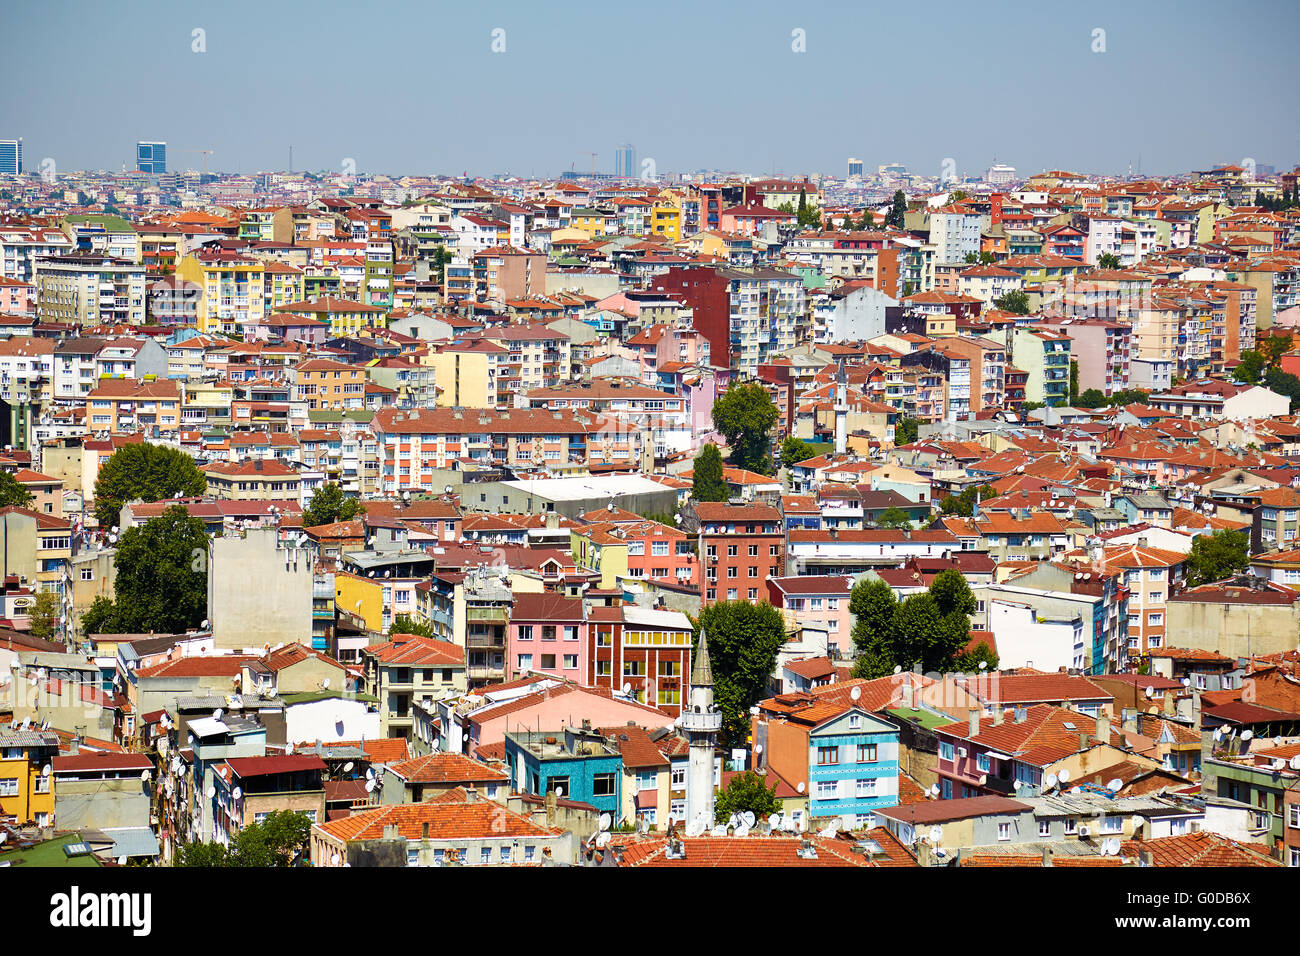 The residental neighborhoods of houses in the Besiktas region, Istanbul Stock Photo